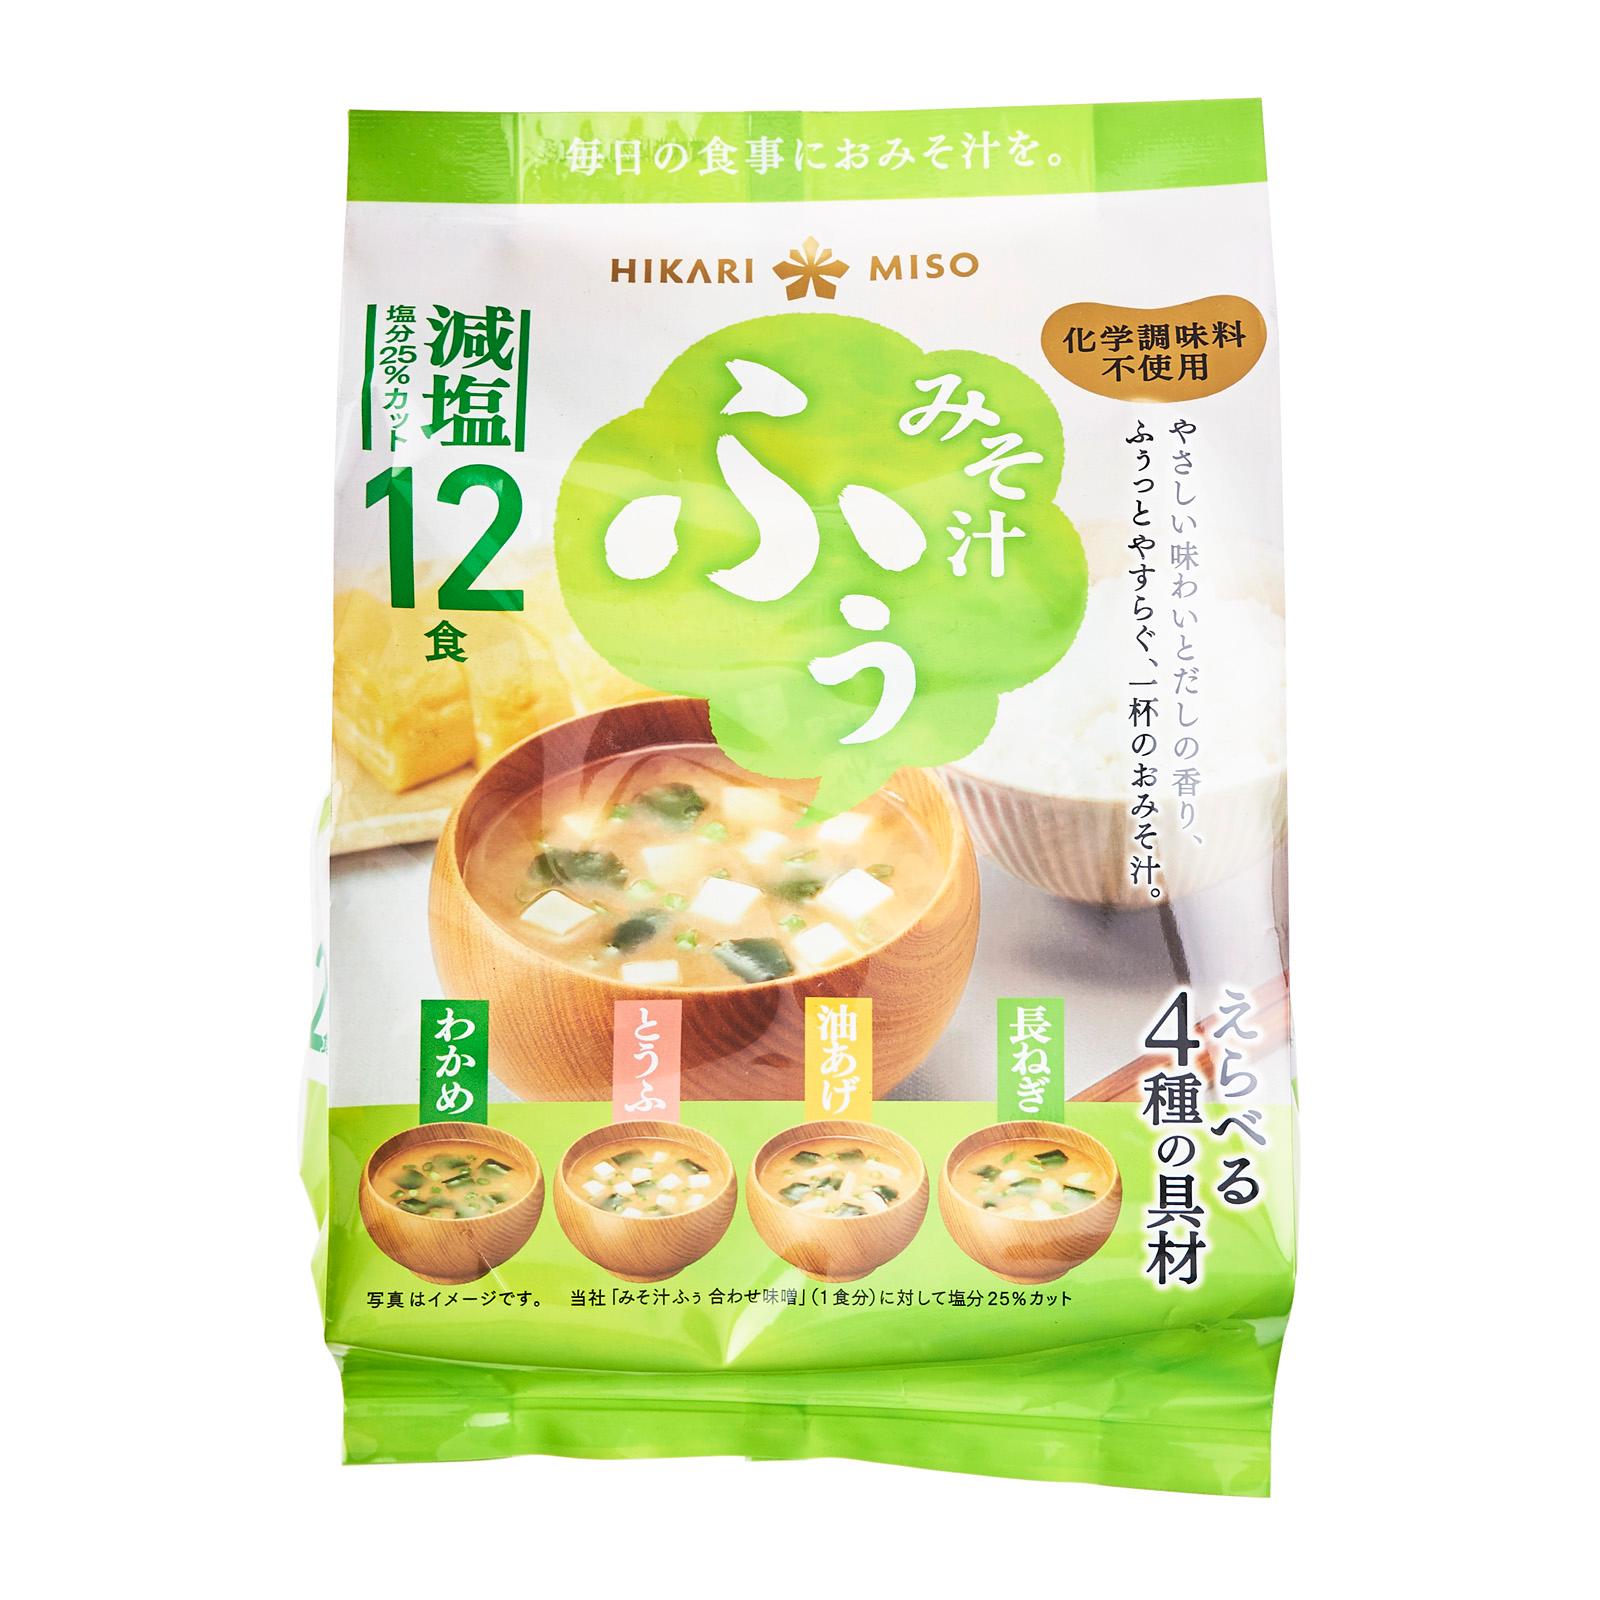 Maruman MSG Free Honzukuri Shiro Miso Paste 750g Tub